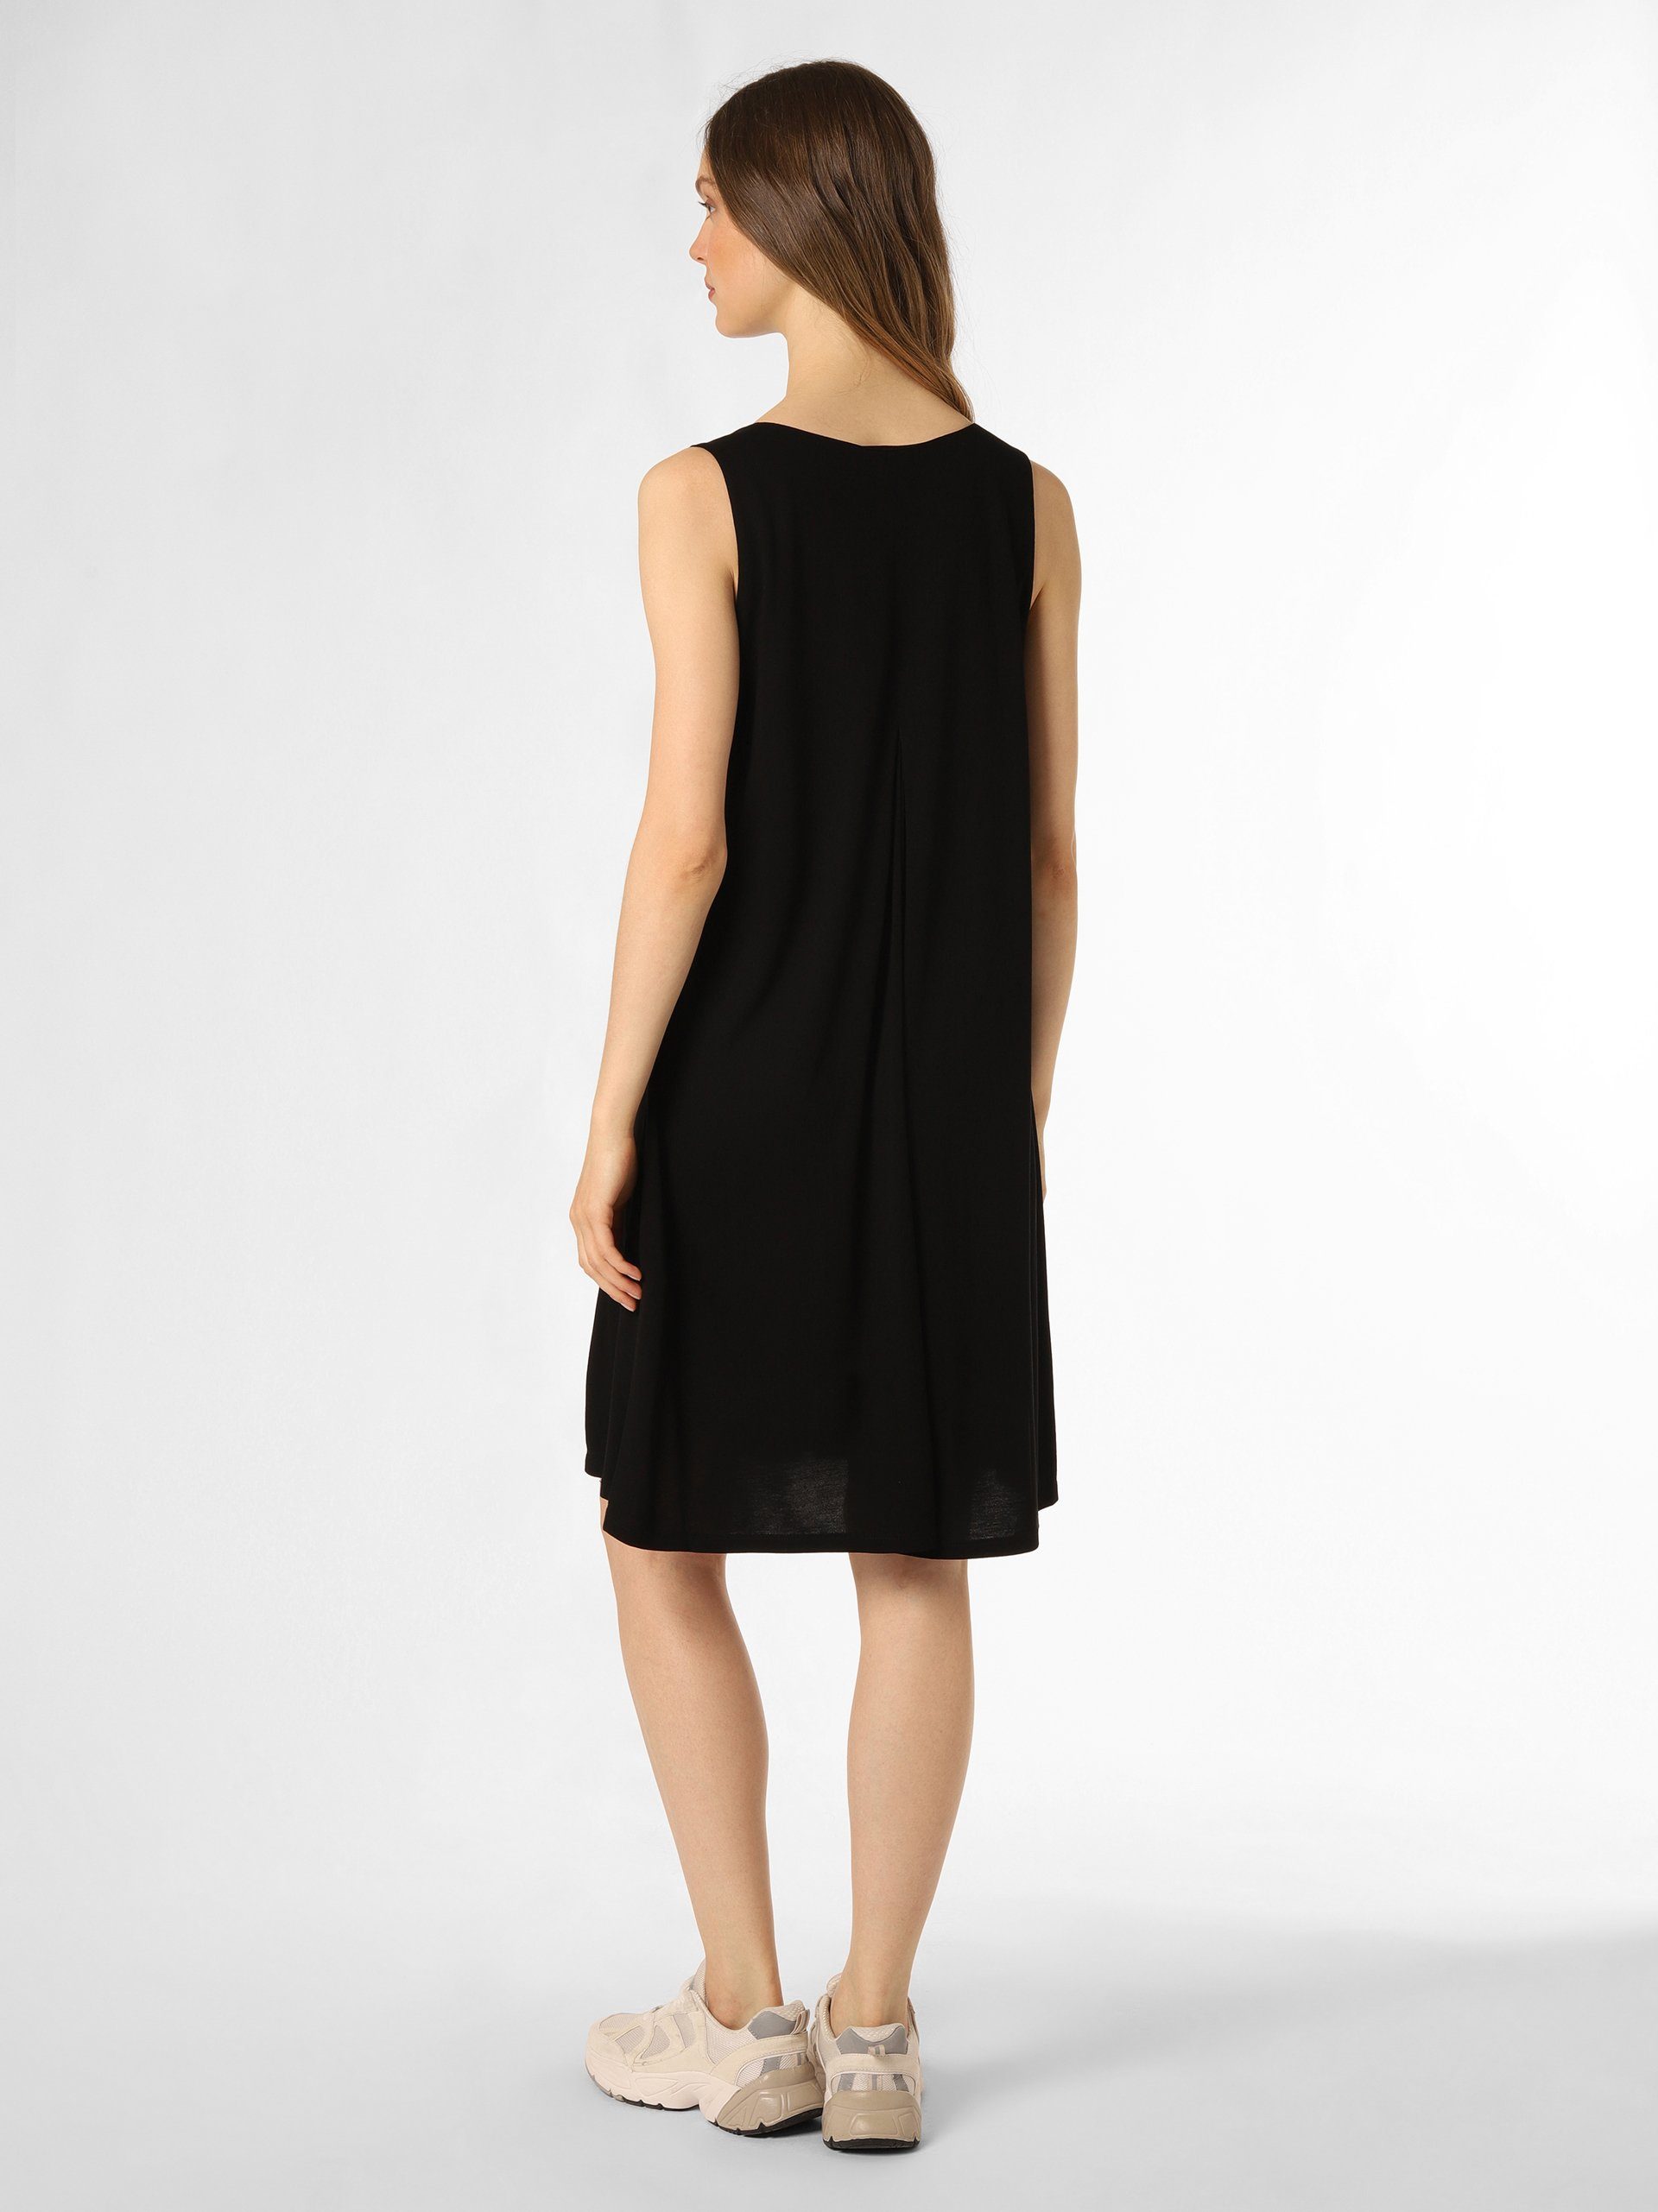 Winga OPUS schwarz A-Linien-Kleid